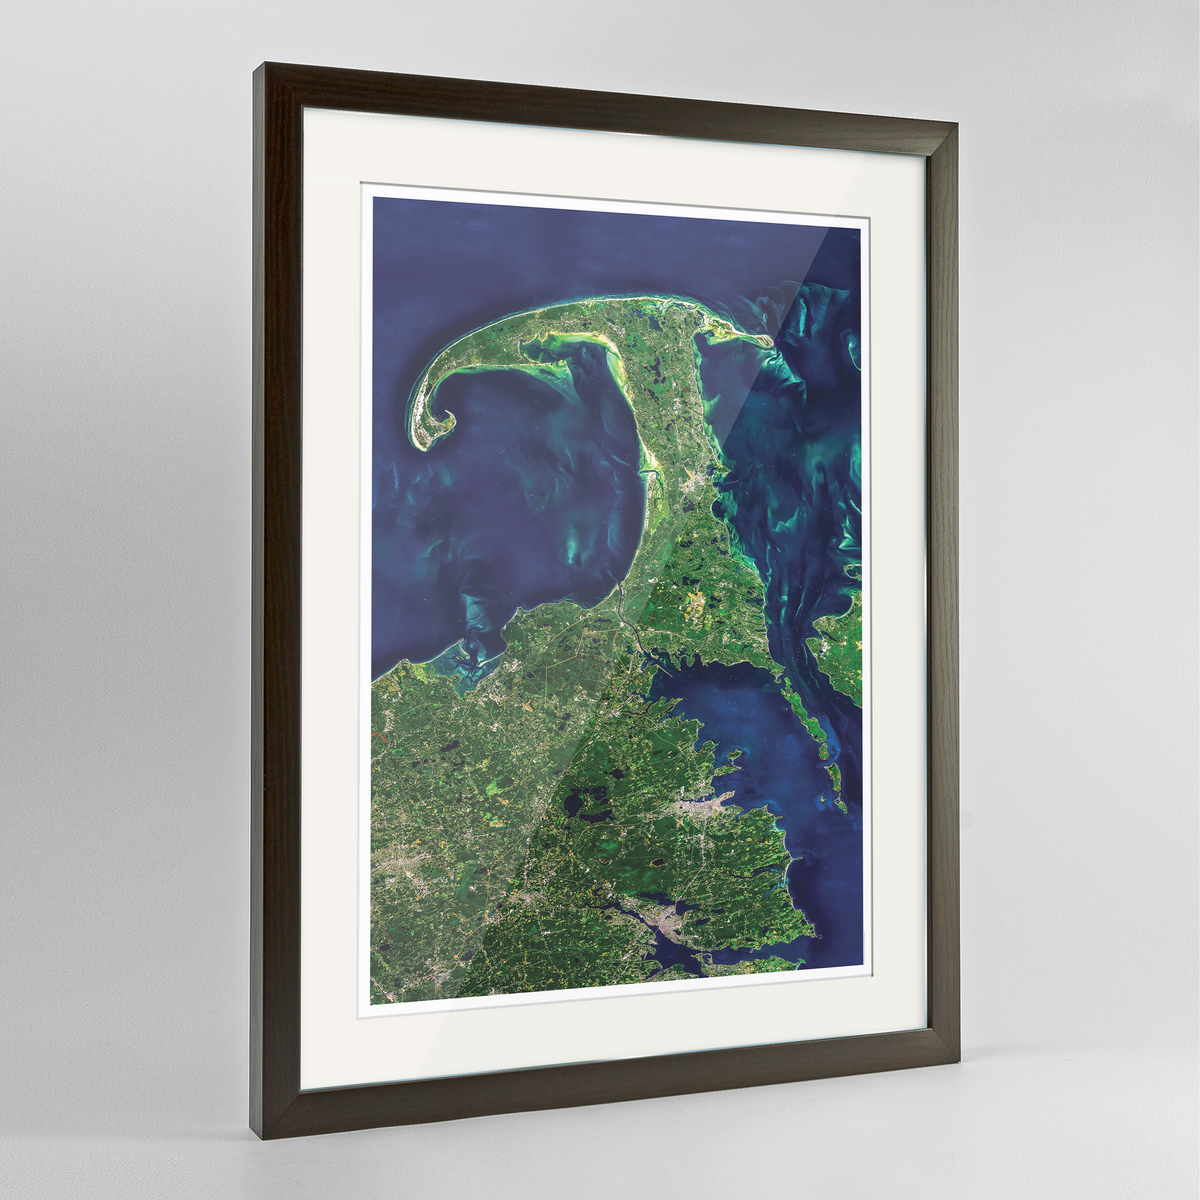 Cape Cod Earth Photography -Framed Art Print